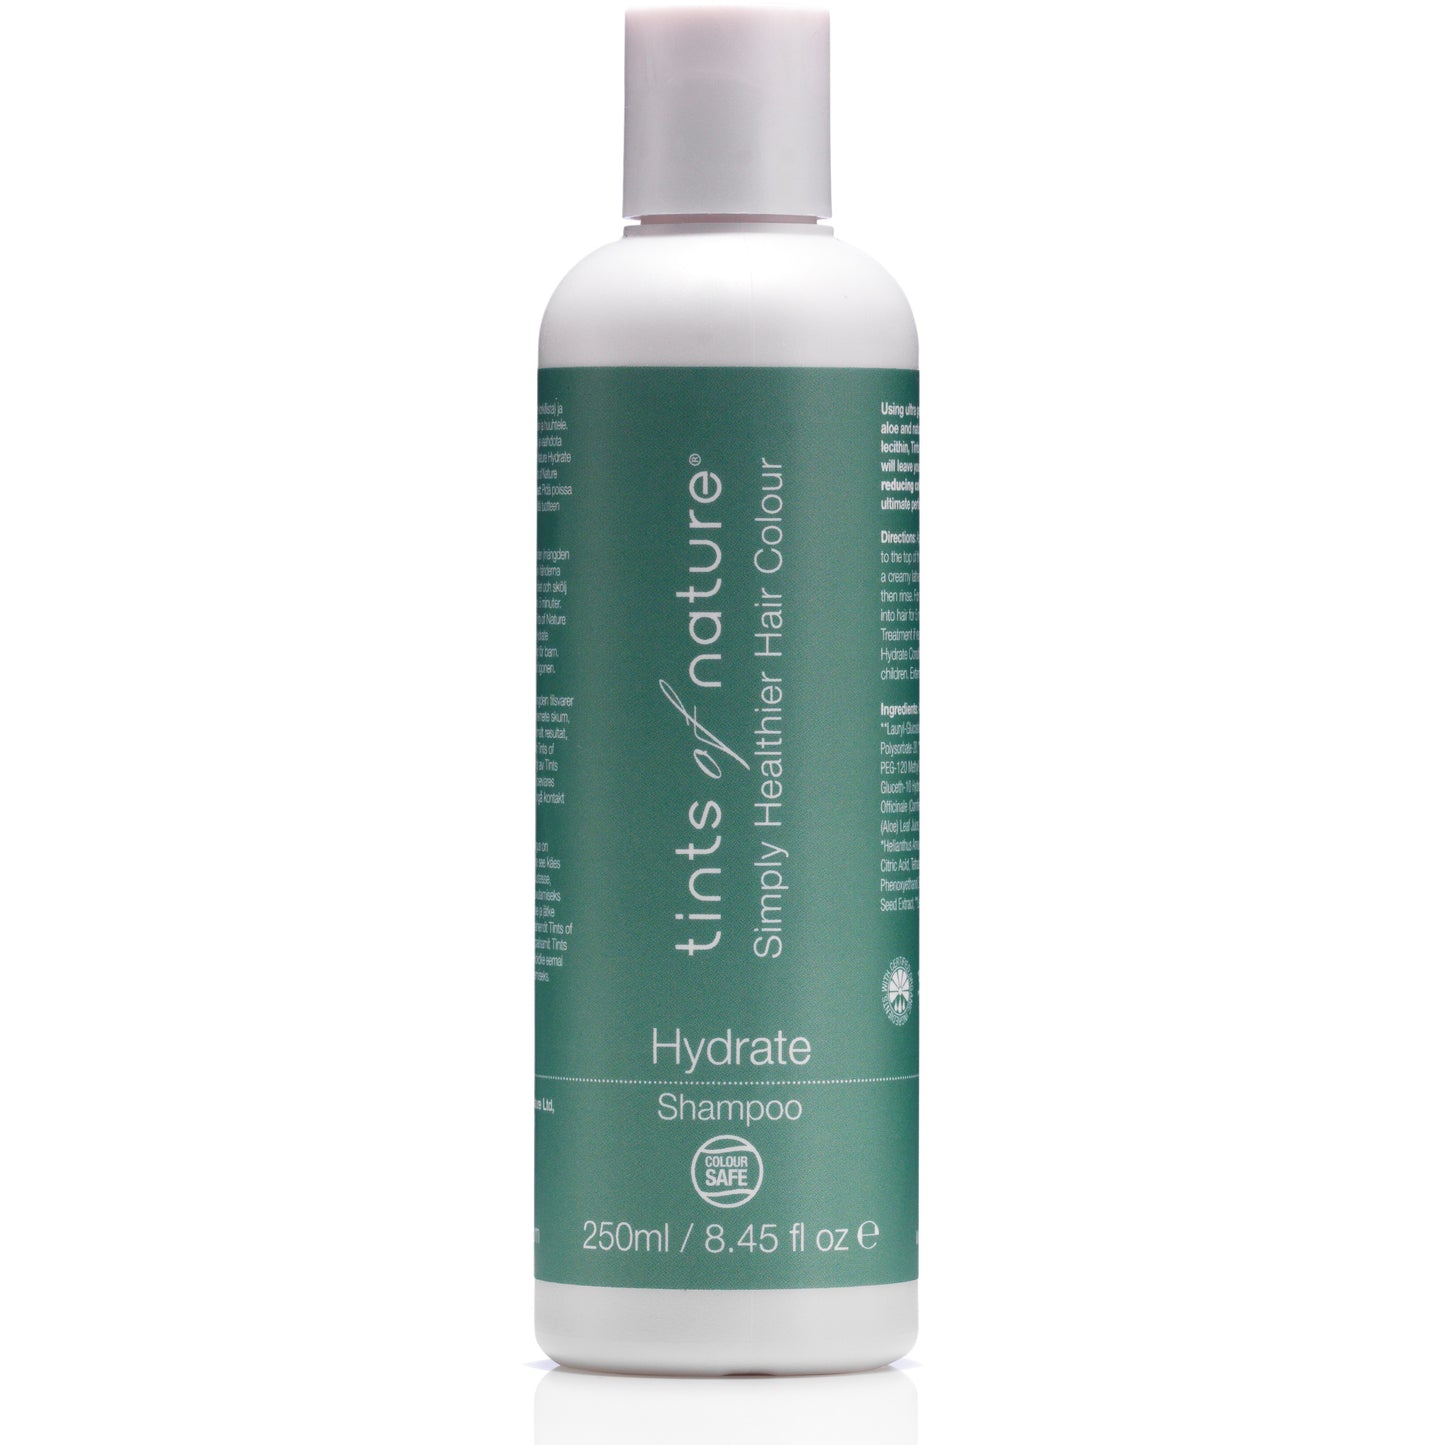 Tints of Nature Hydrate Shampoo 250ml - 250ml